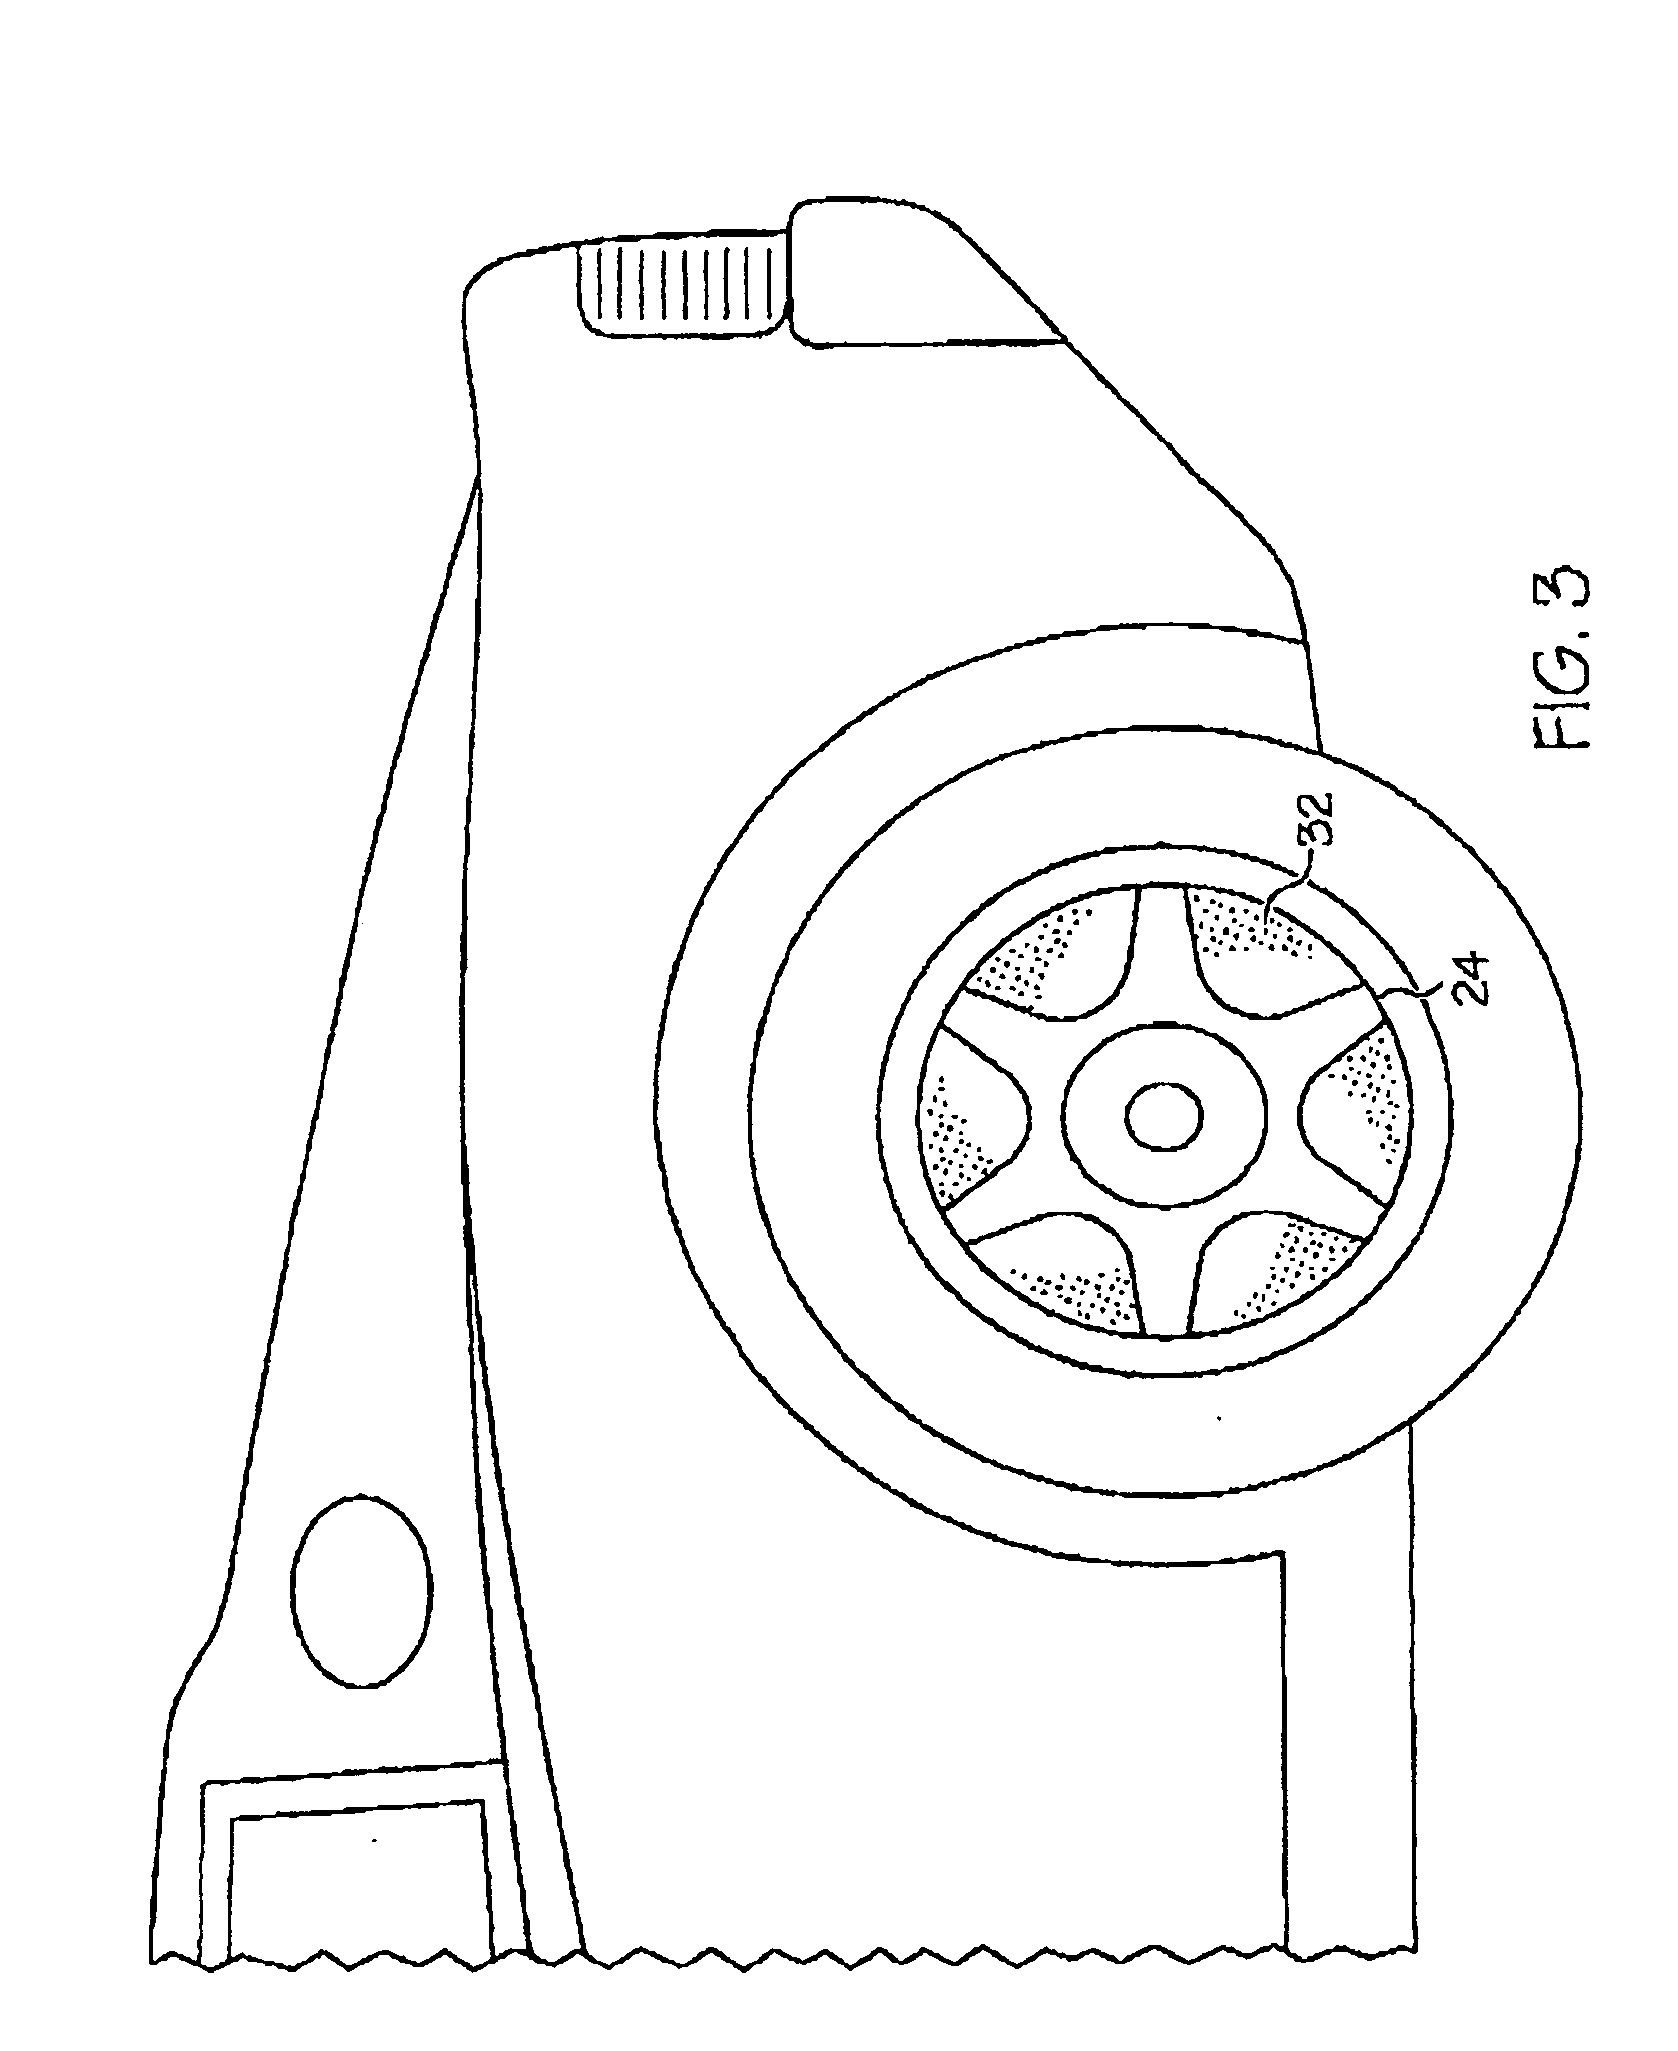 Disc brake pad with visual wear indicator